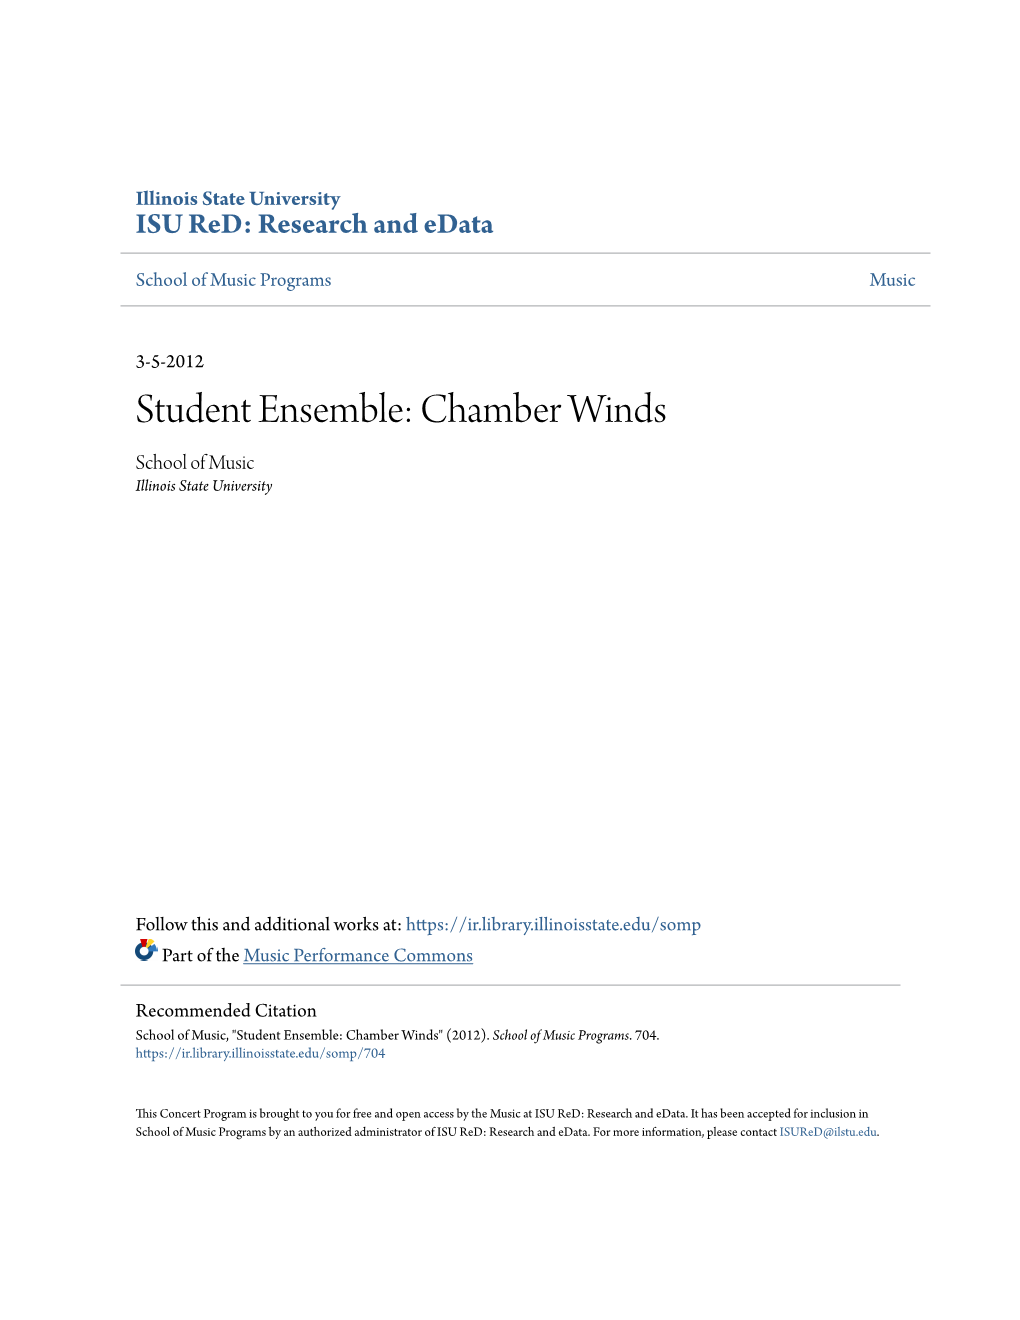 Student Ensemble: Chamber Winds School of Music Illinois State University